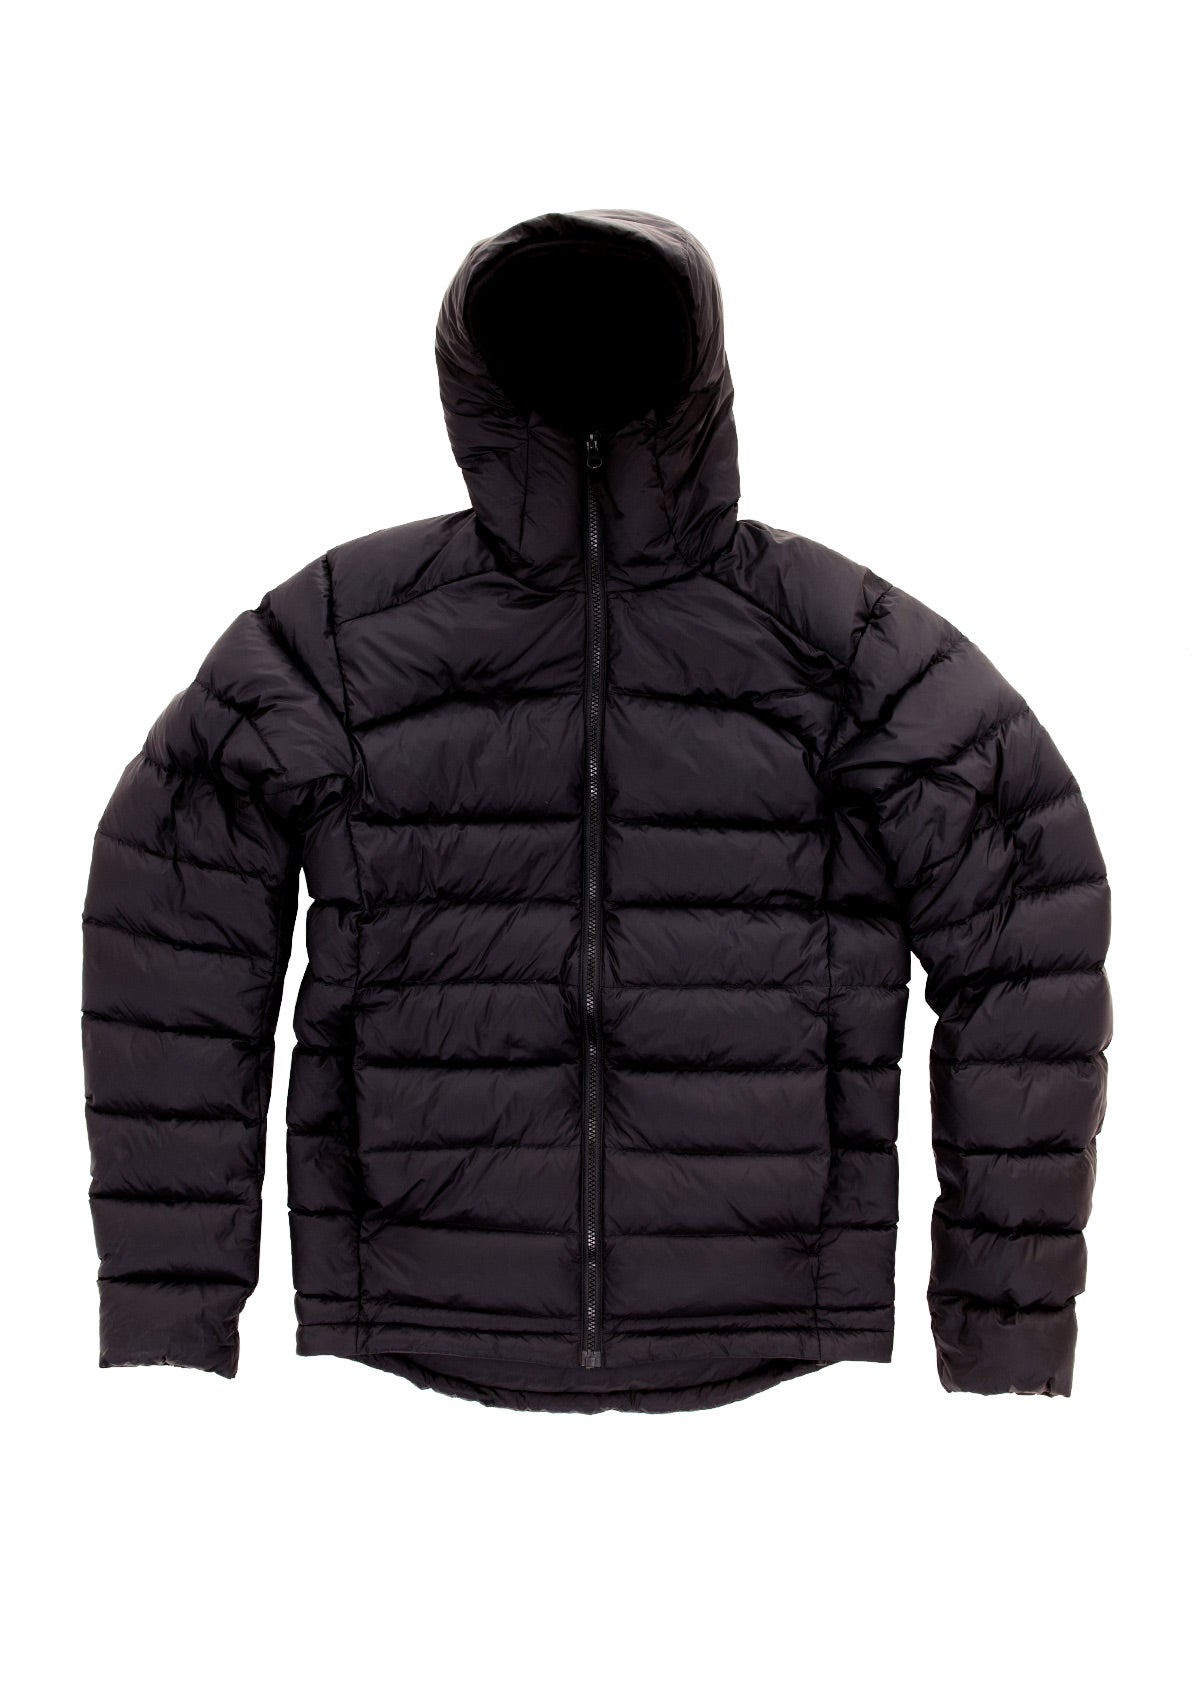 needessentials down jacket puffer winter non branded black